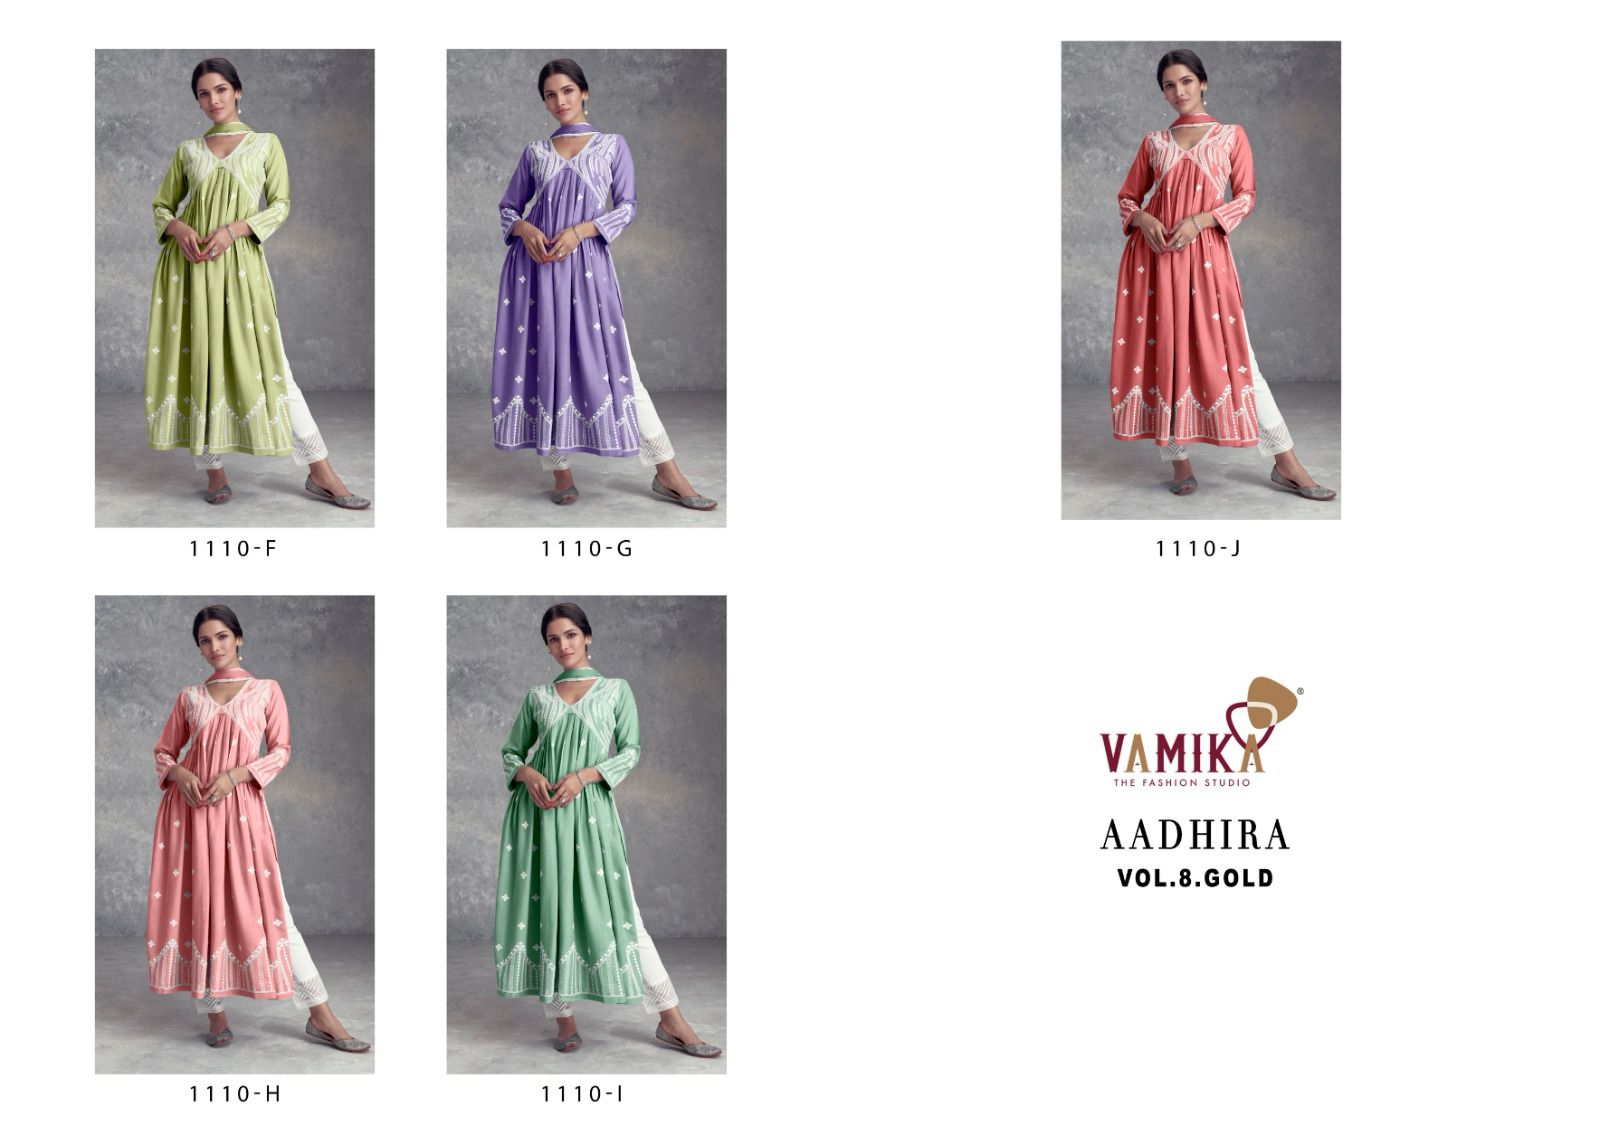 Vamika Aadhira Vol 8 Gold collection 1